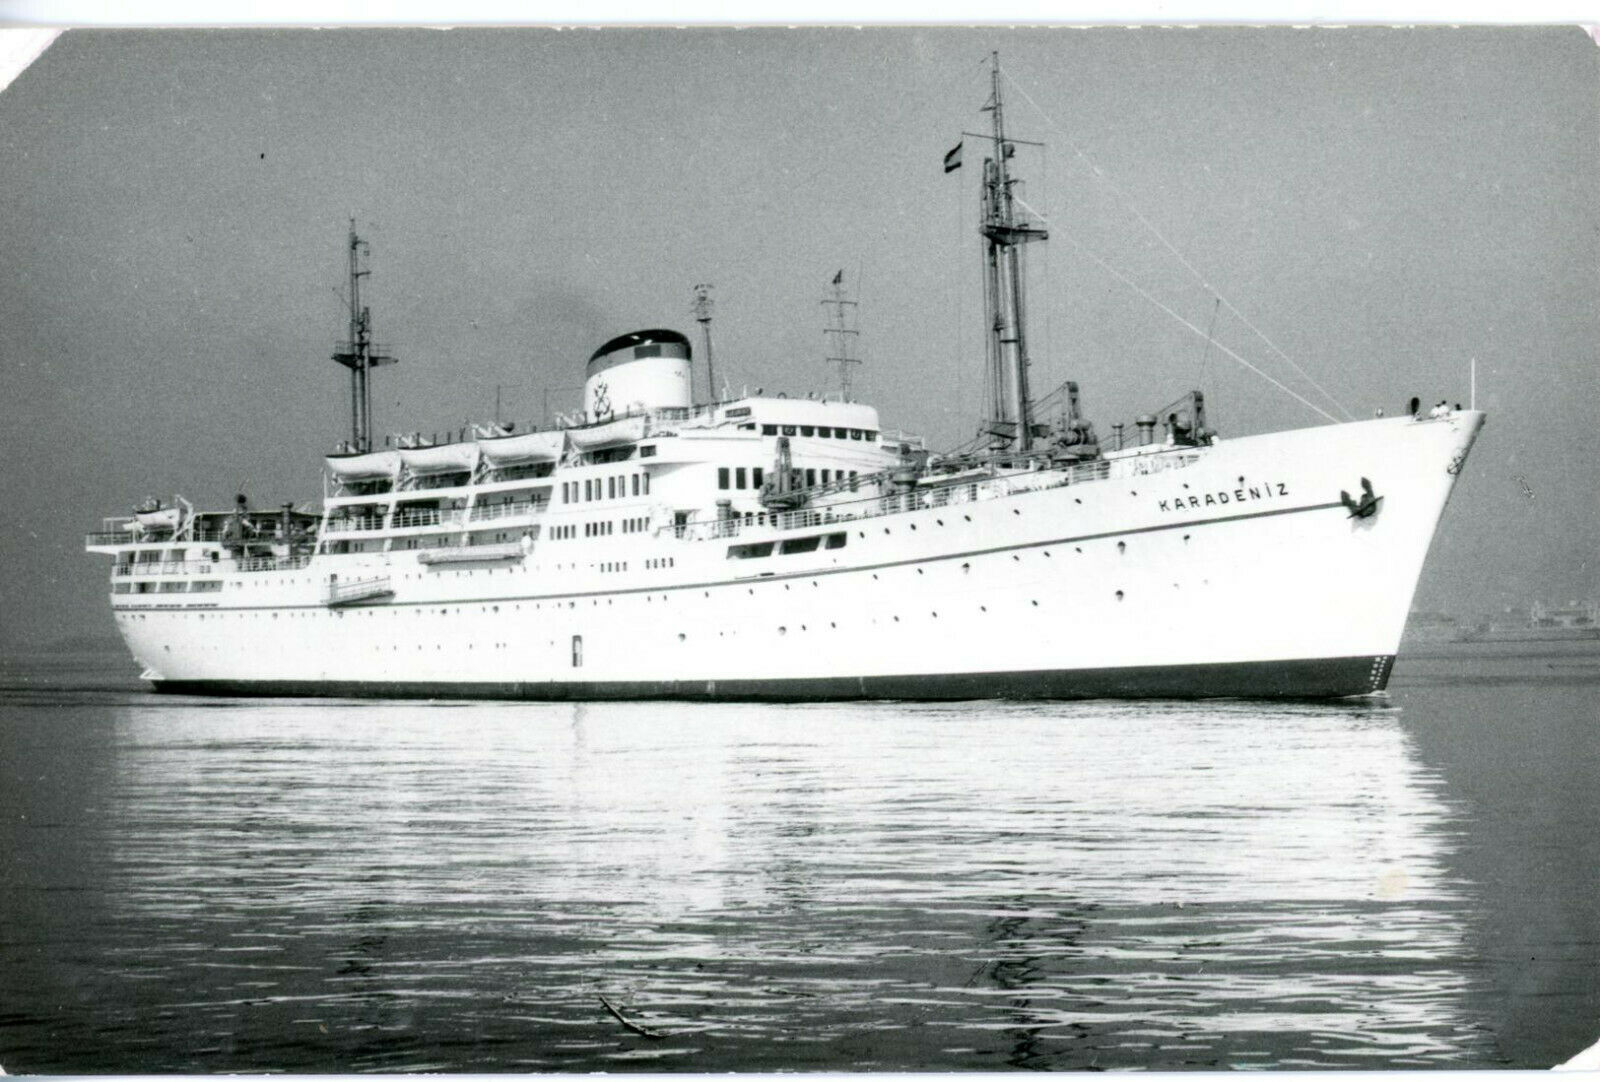 Turkish Maritime Line's Karadeniz Of 1956